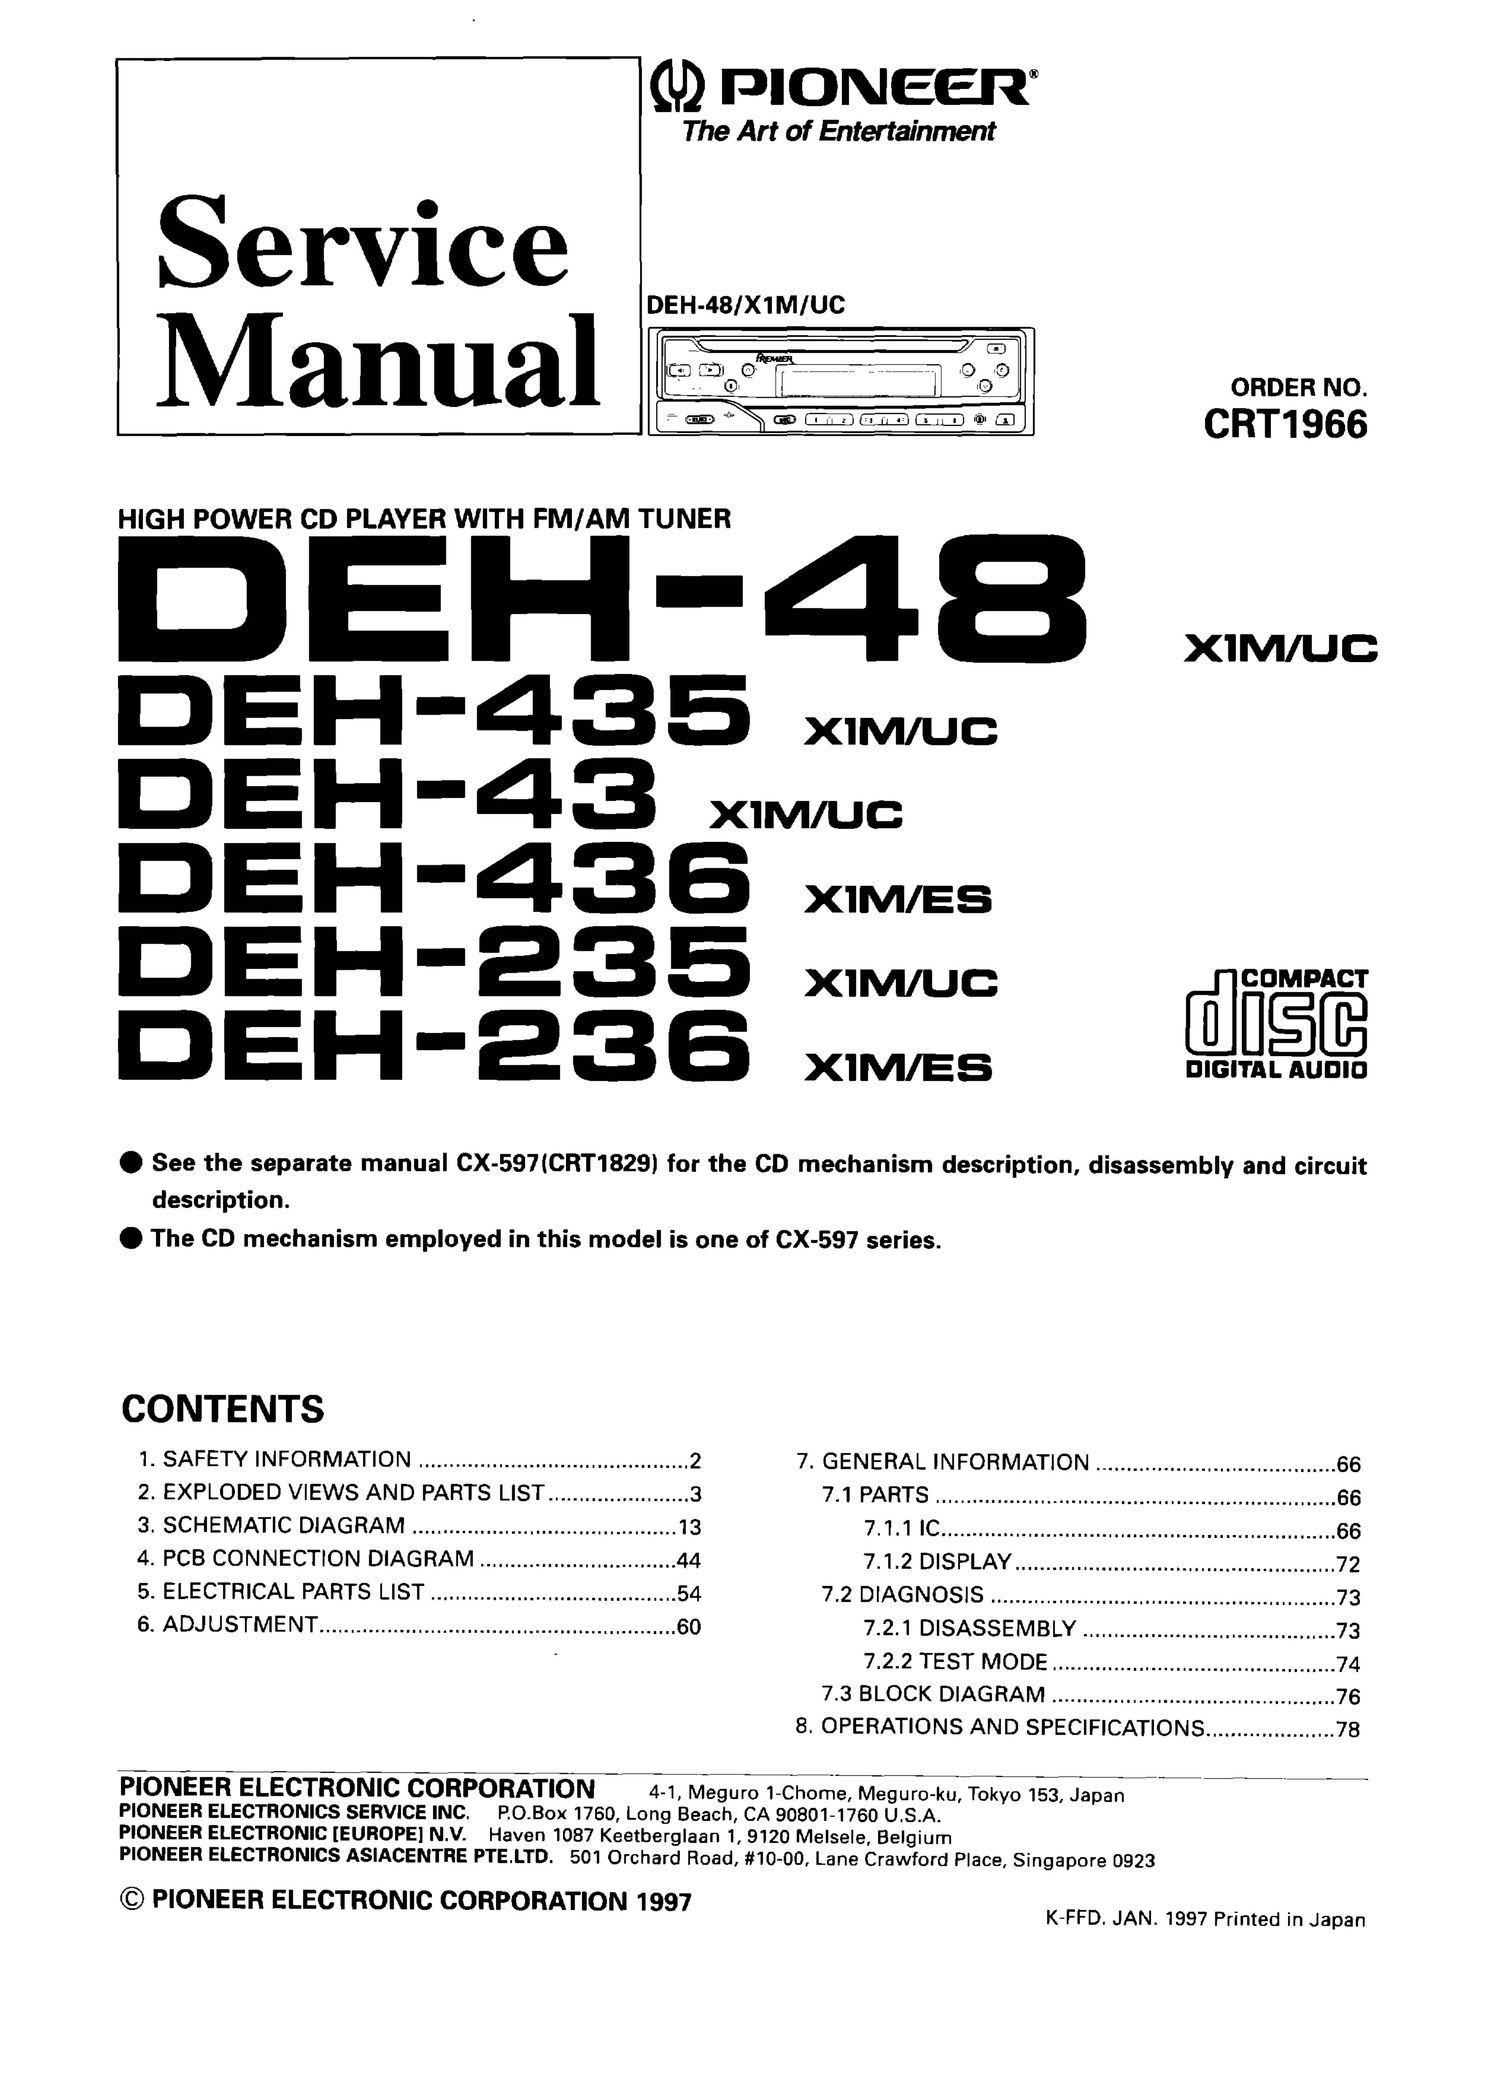 pioneer deh 43 service manual